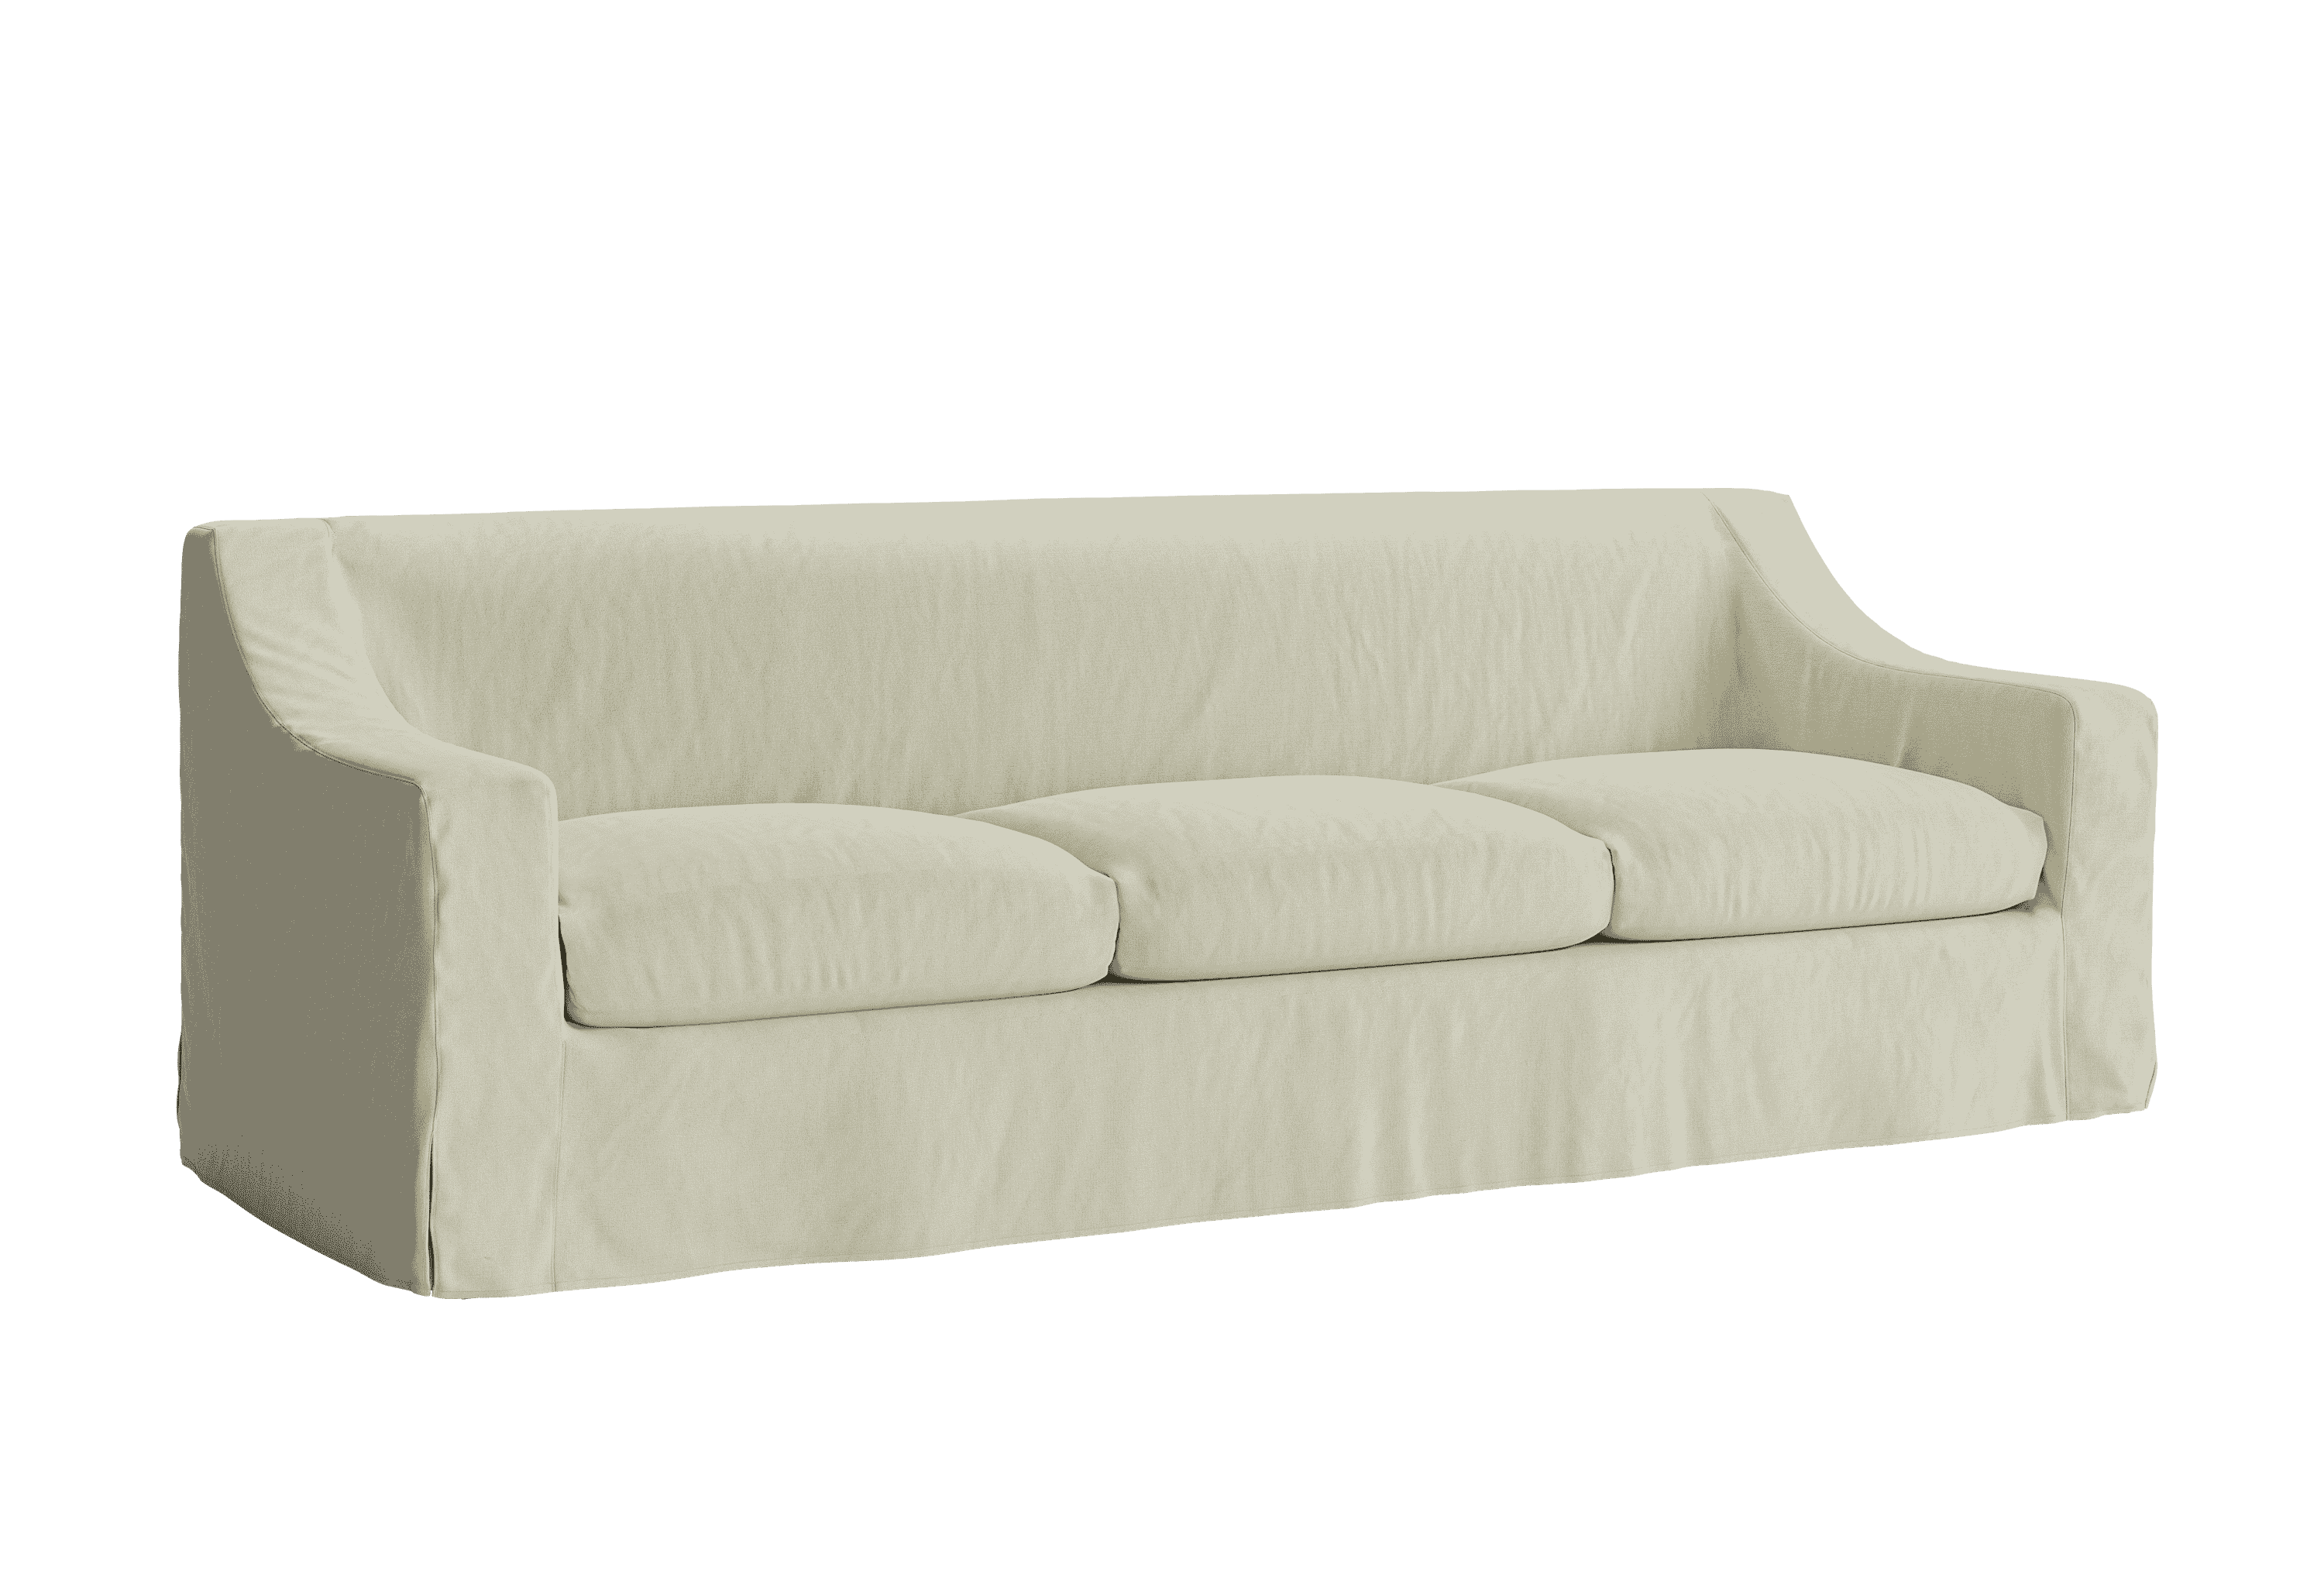 The Evergreen Sofa in Hemp